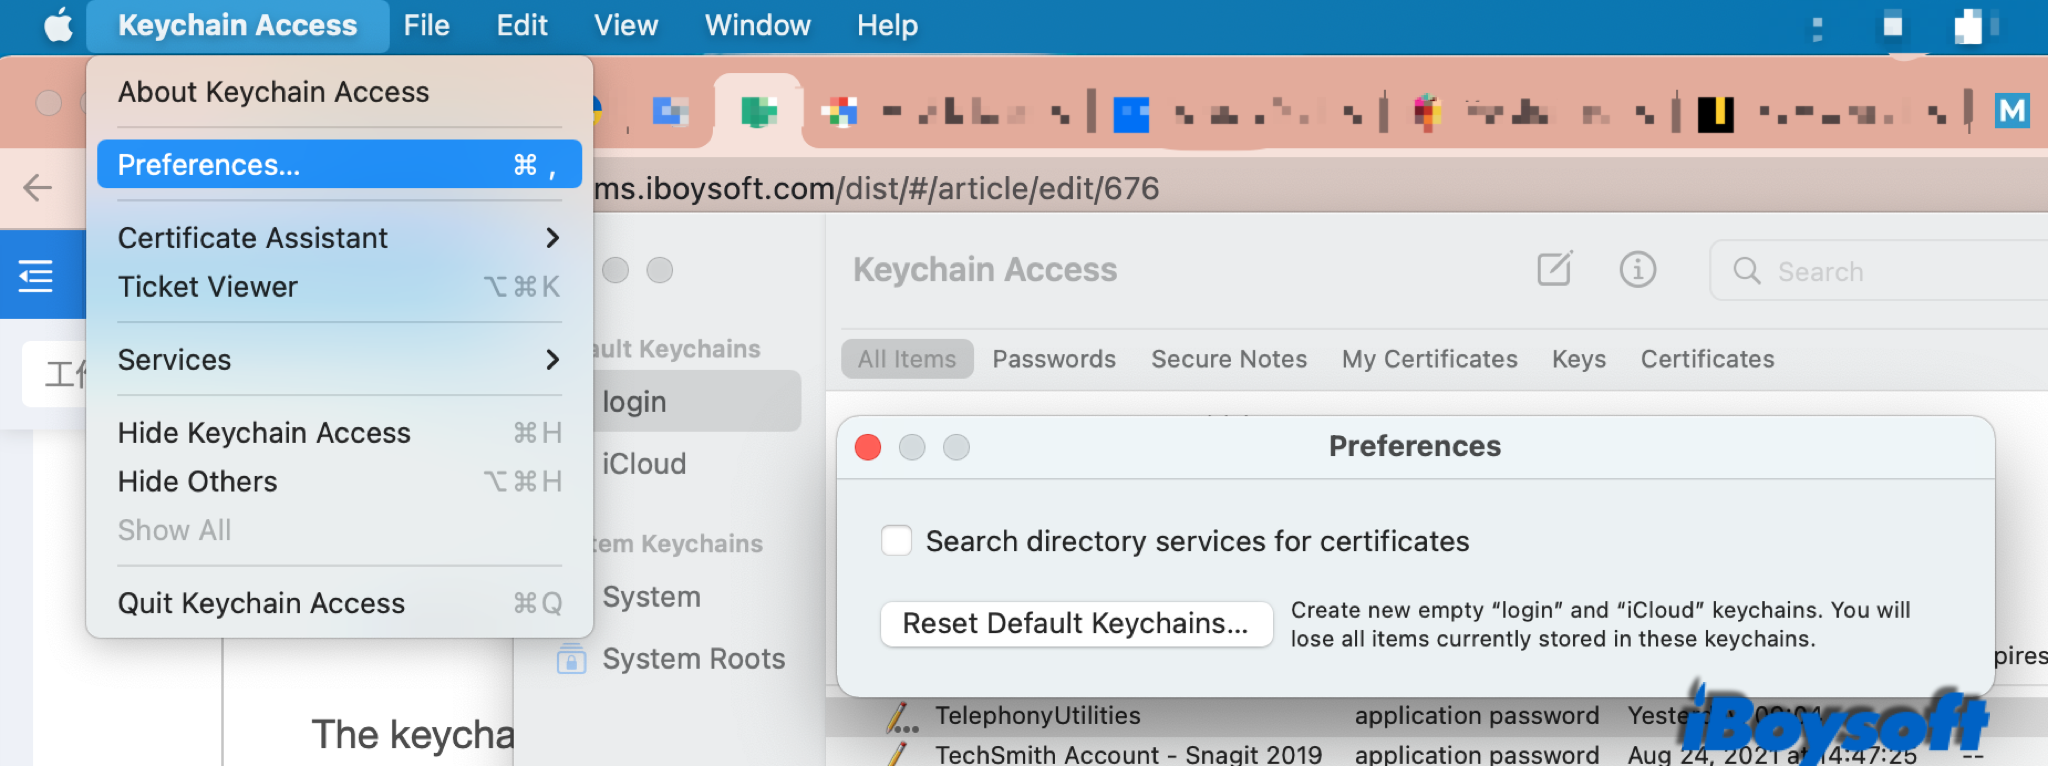 reset default keychains